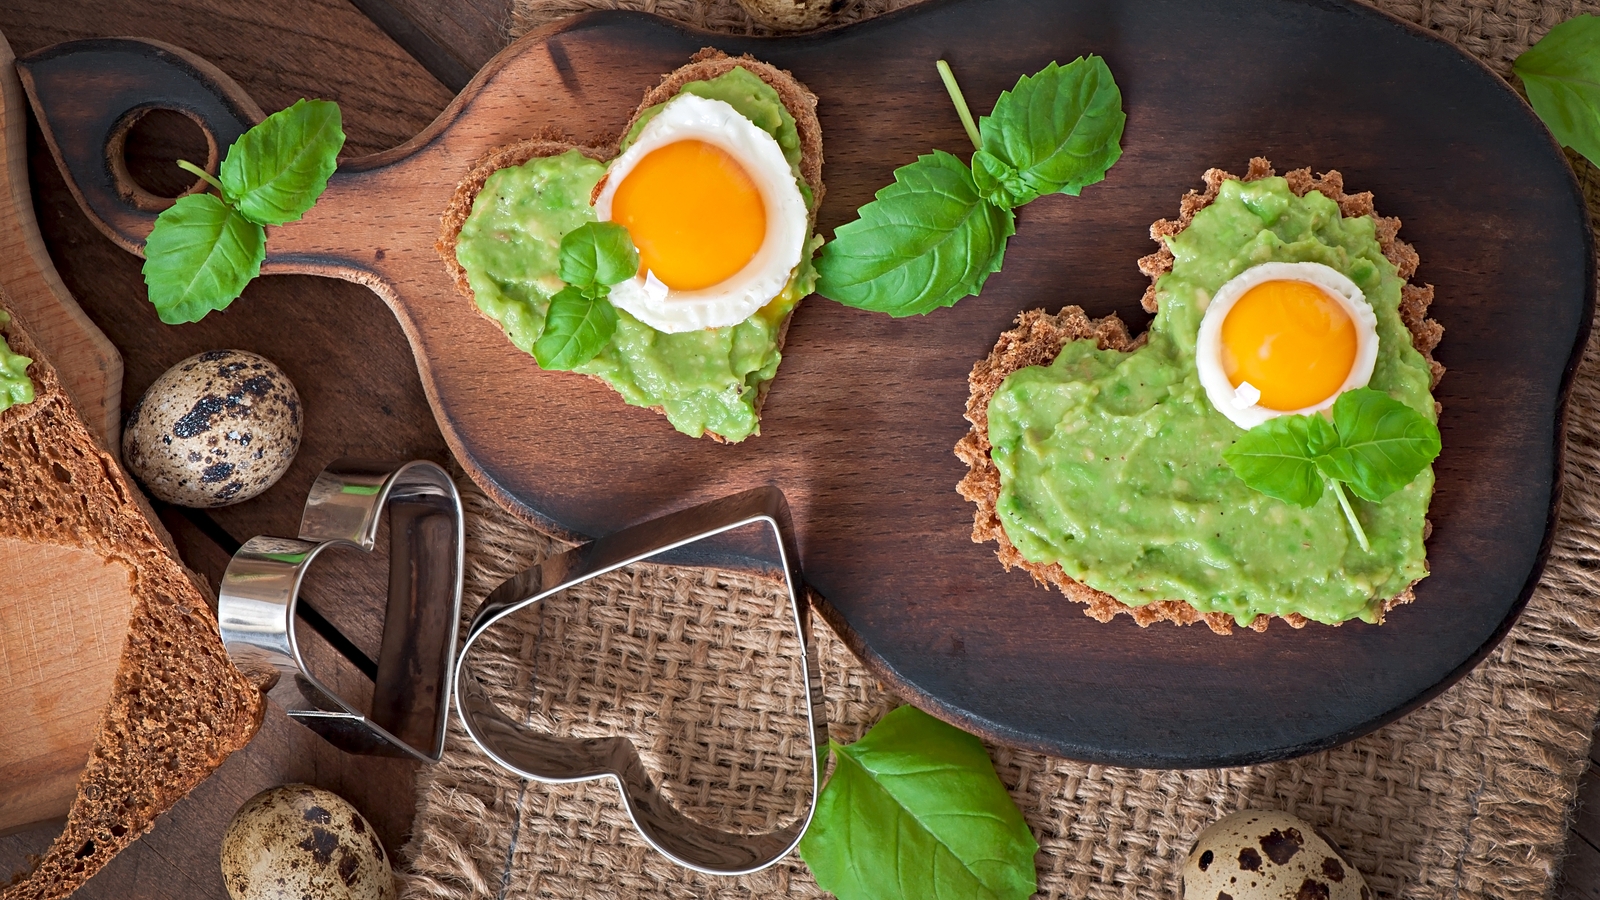 Image: Breakfast, scrambled eggs, shape of eggs, hearts, greens